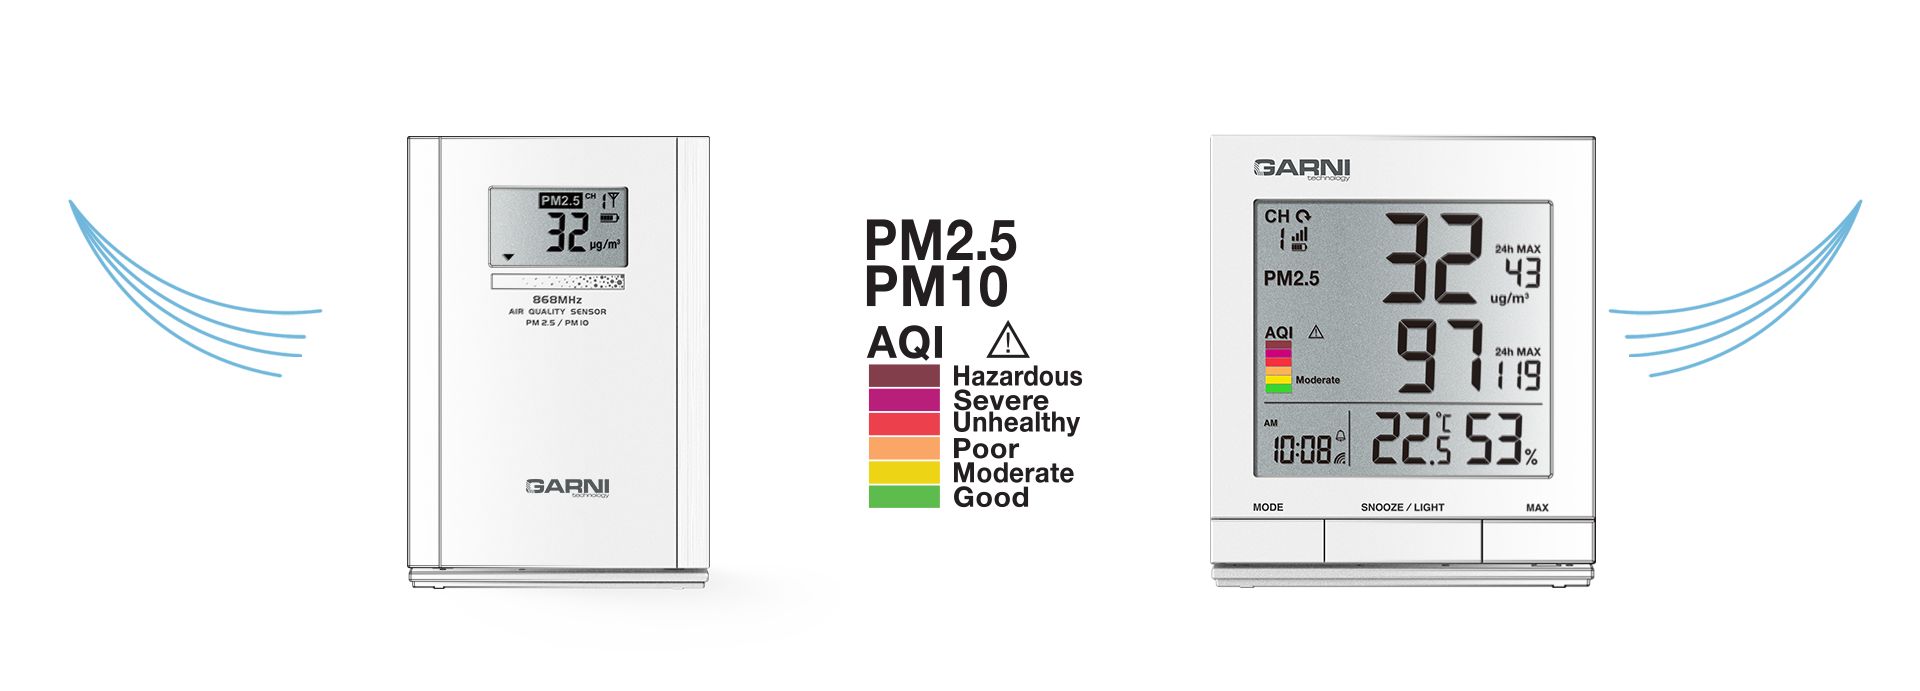 Measurement of particulate matter GARNI 204 OneCare